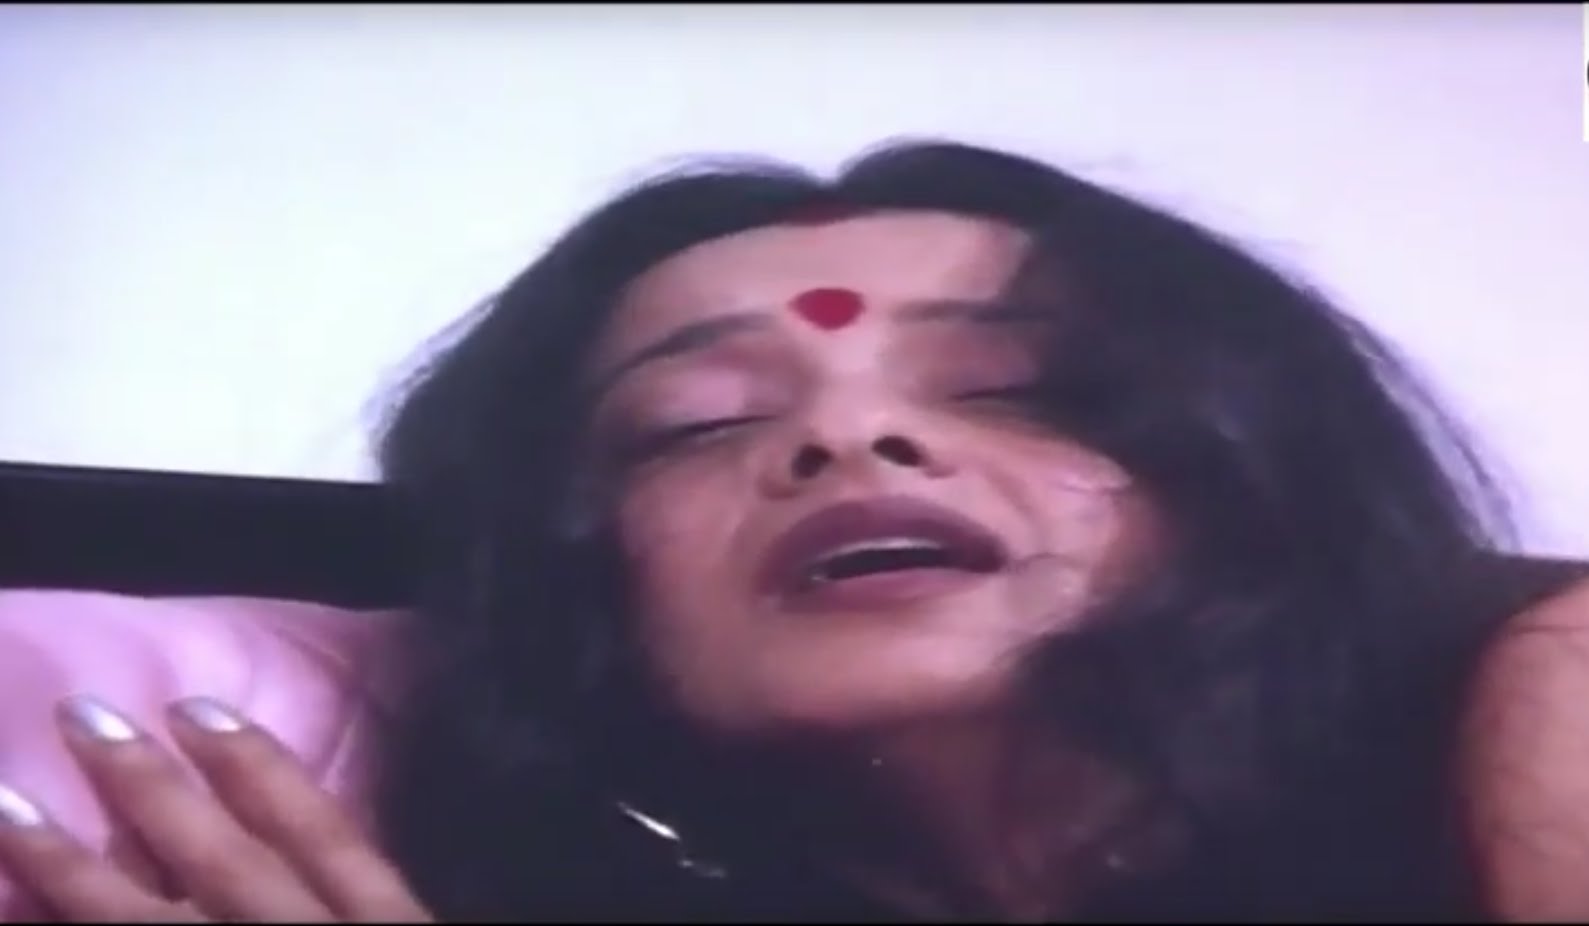 Sunita Rani Ki Bf Video Hd Kareena Ke Sath - à¤«à¤¿à¤²à¥à¤® à¤•à¥‡ à¤¸à¥‡à¤Ÿ à¤ªà¤° à¤°à¥‡à¤–à¤¾ à¤•à¤¾ à¤°à¥‡à¤ª, à¤¦à¥‡à¤–à¤¤à¤¾ à¤°à¤¹ à¤—à¤¯à¤¾ à¤¬à¥‰à¤²à¥€à¤µà¥à¤¡